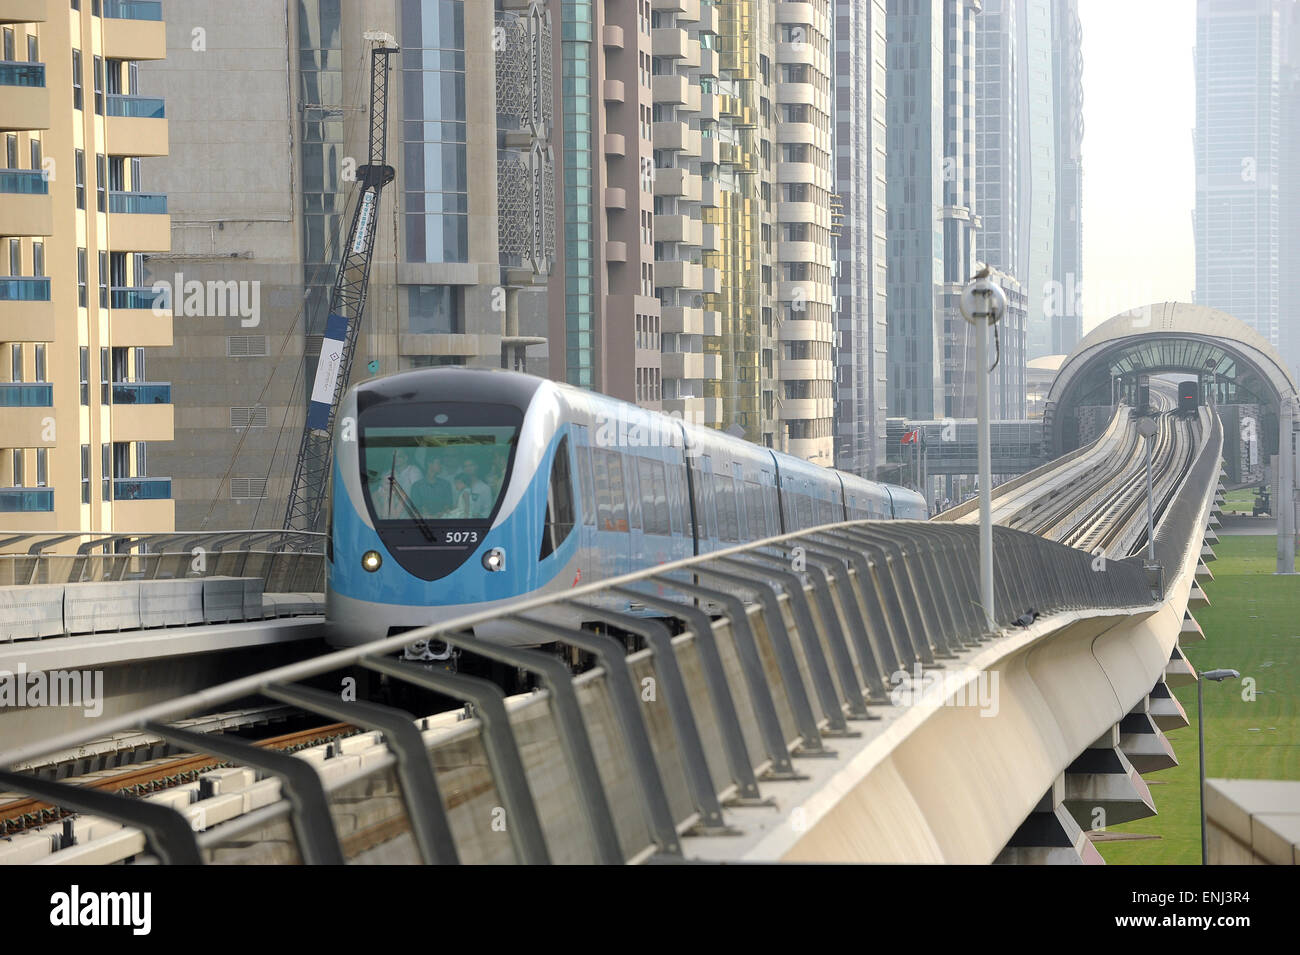 Dubai metro  train leaving station along Sheikh Zeyad Road in the United Arab Emirates Stock Photo